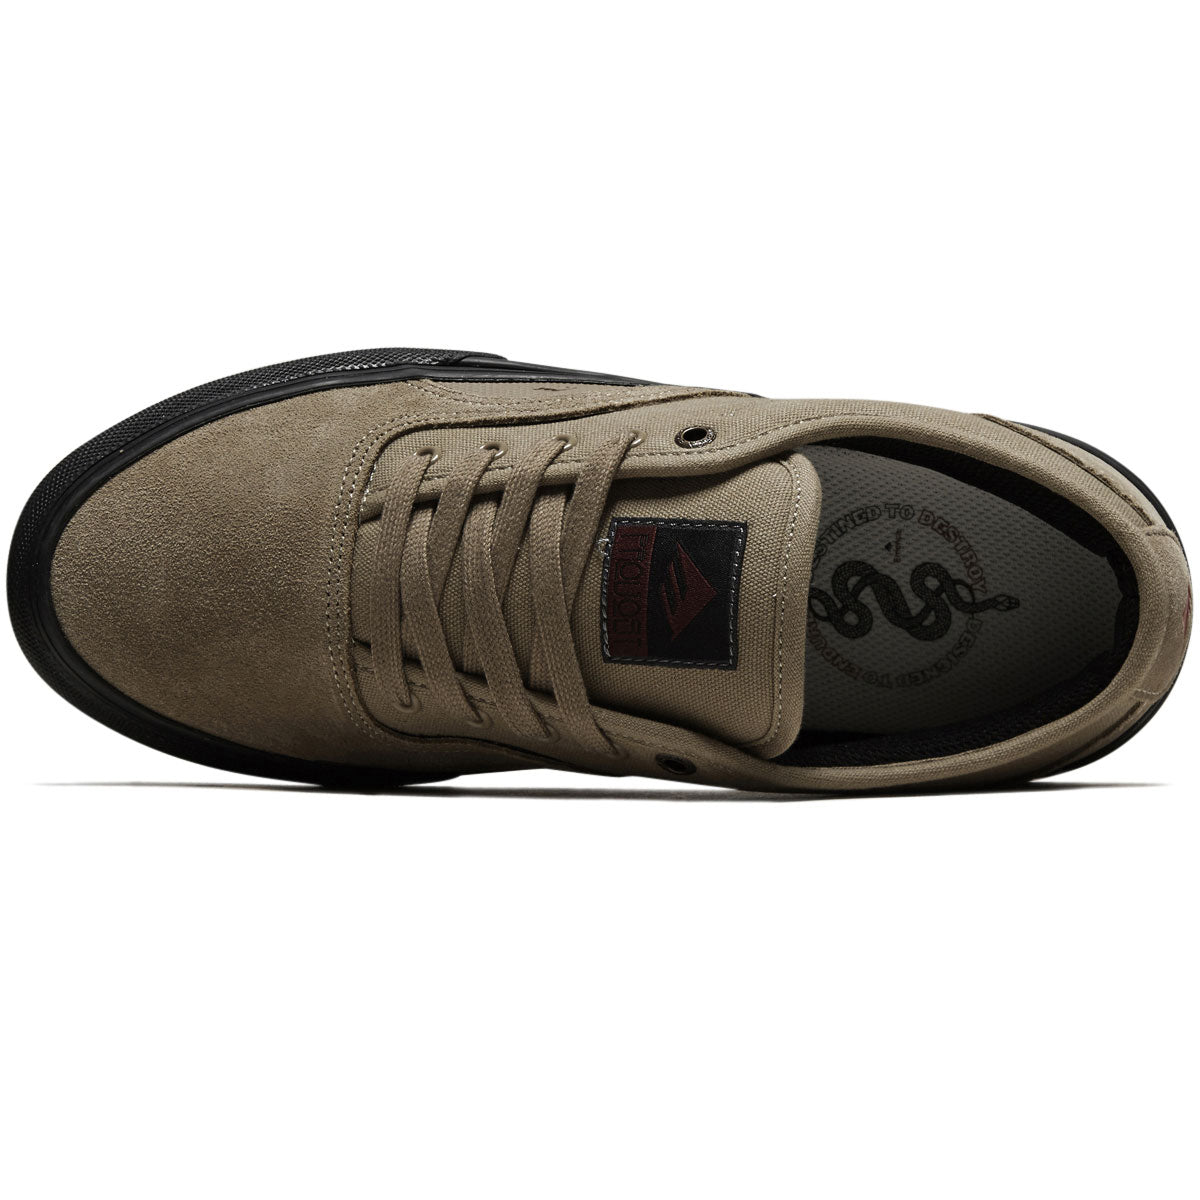 Emerica Provost G6 Shoes - Olive/Black image 3